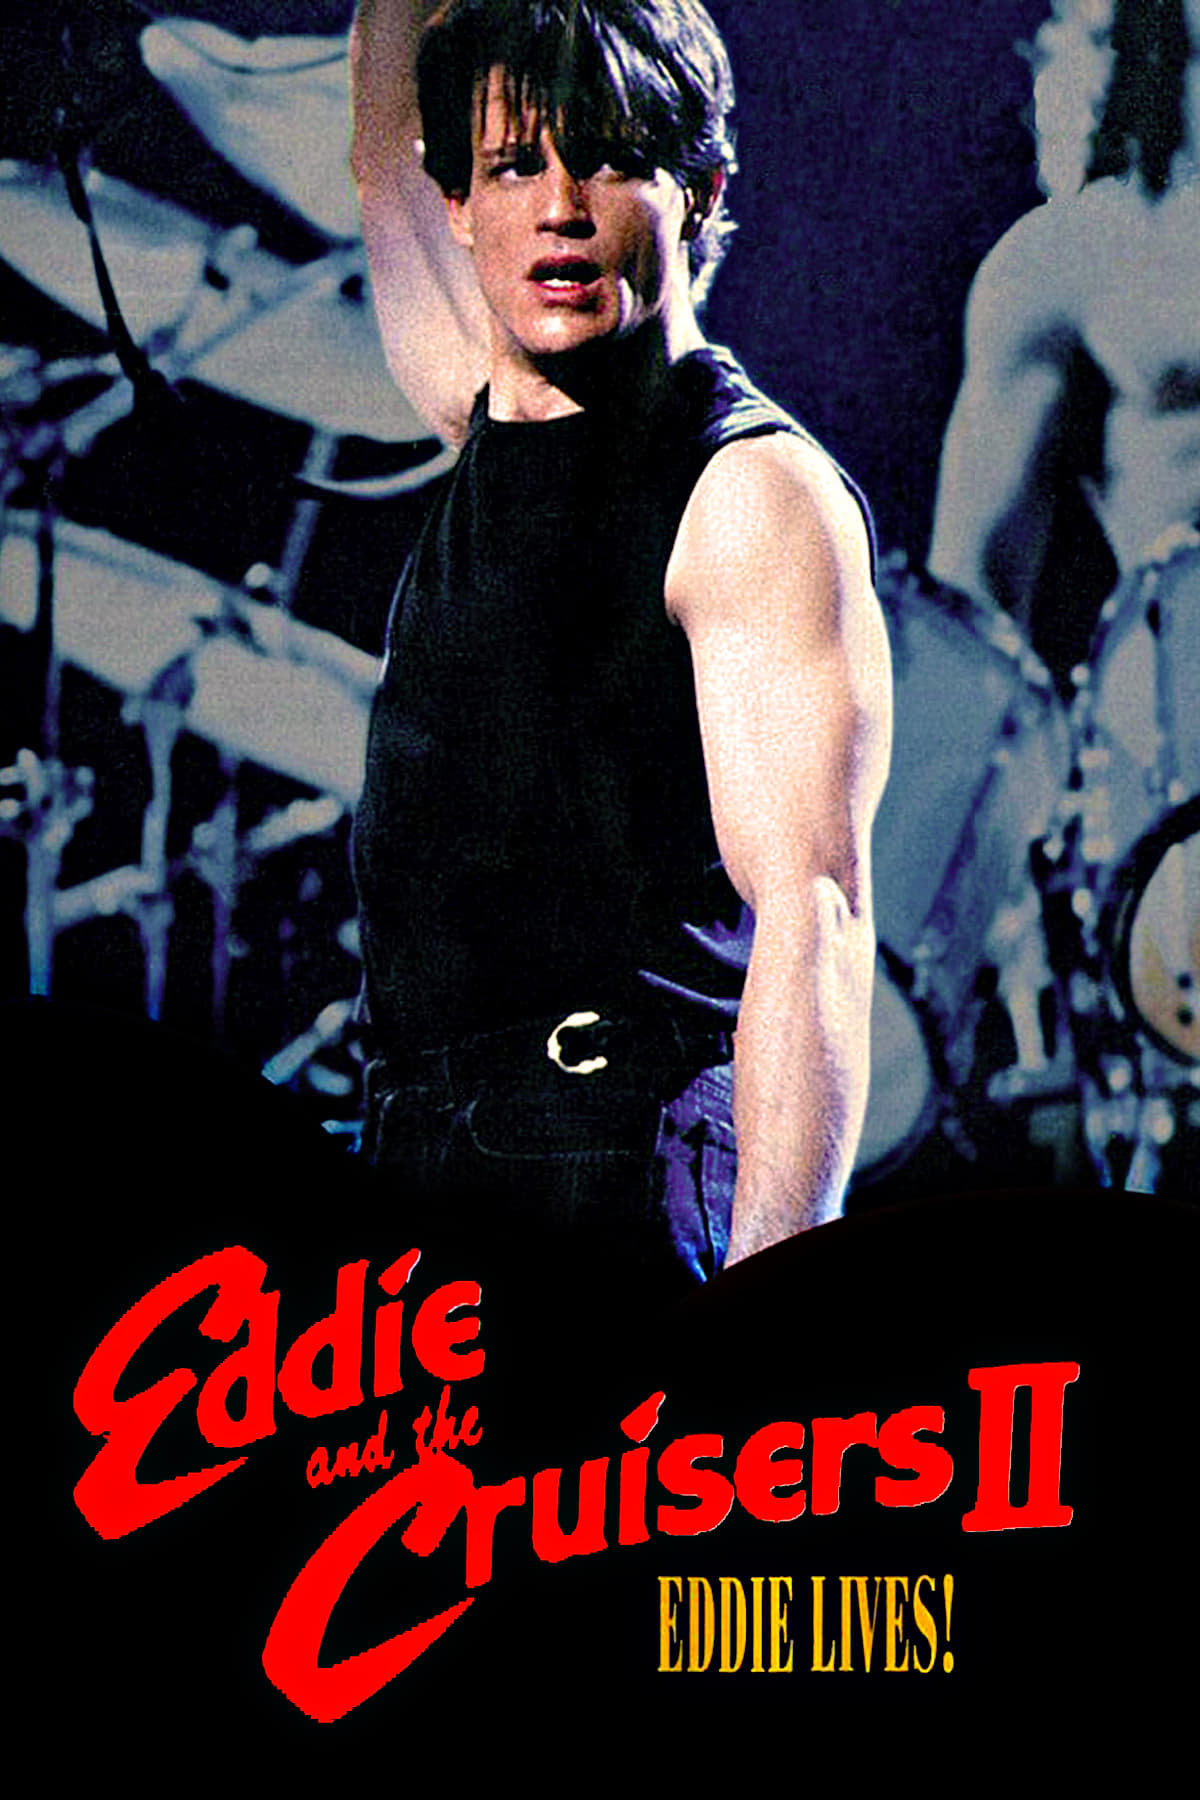 Eddie and the Cruisers II: Eddie Lives! streaming